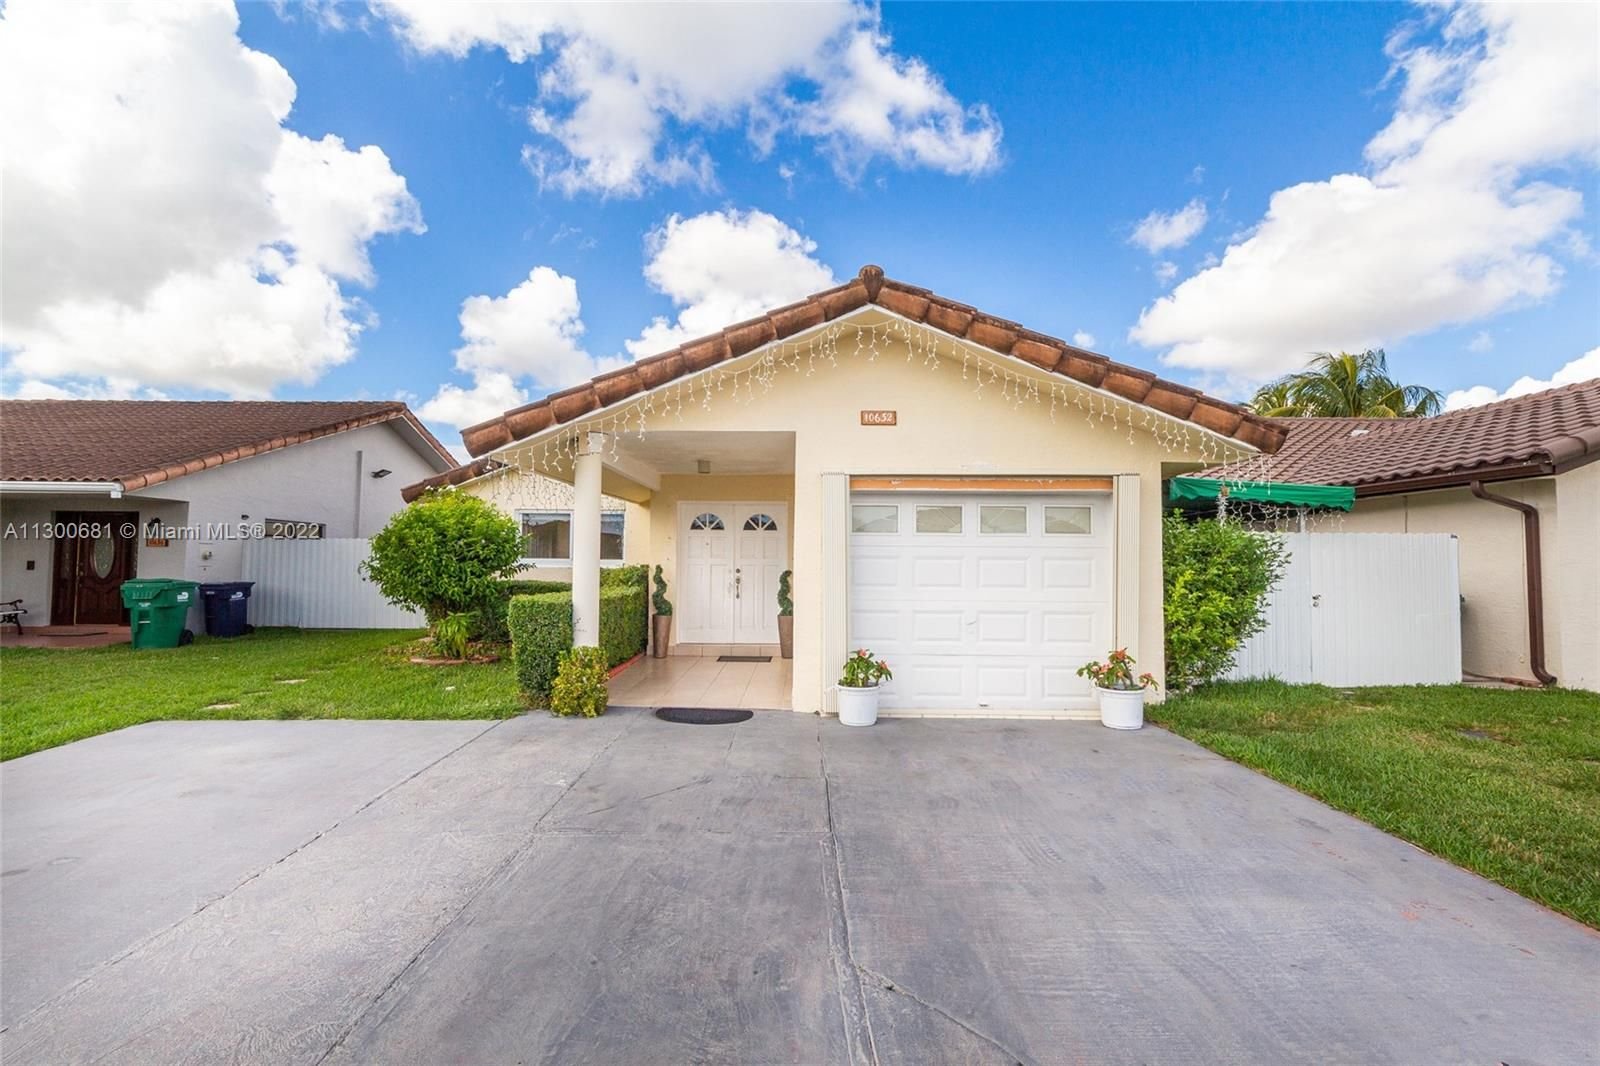 Real estate property located at 10632 145th Ave, Miami-Dade County, Miami, FL